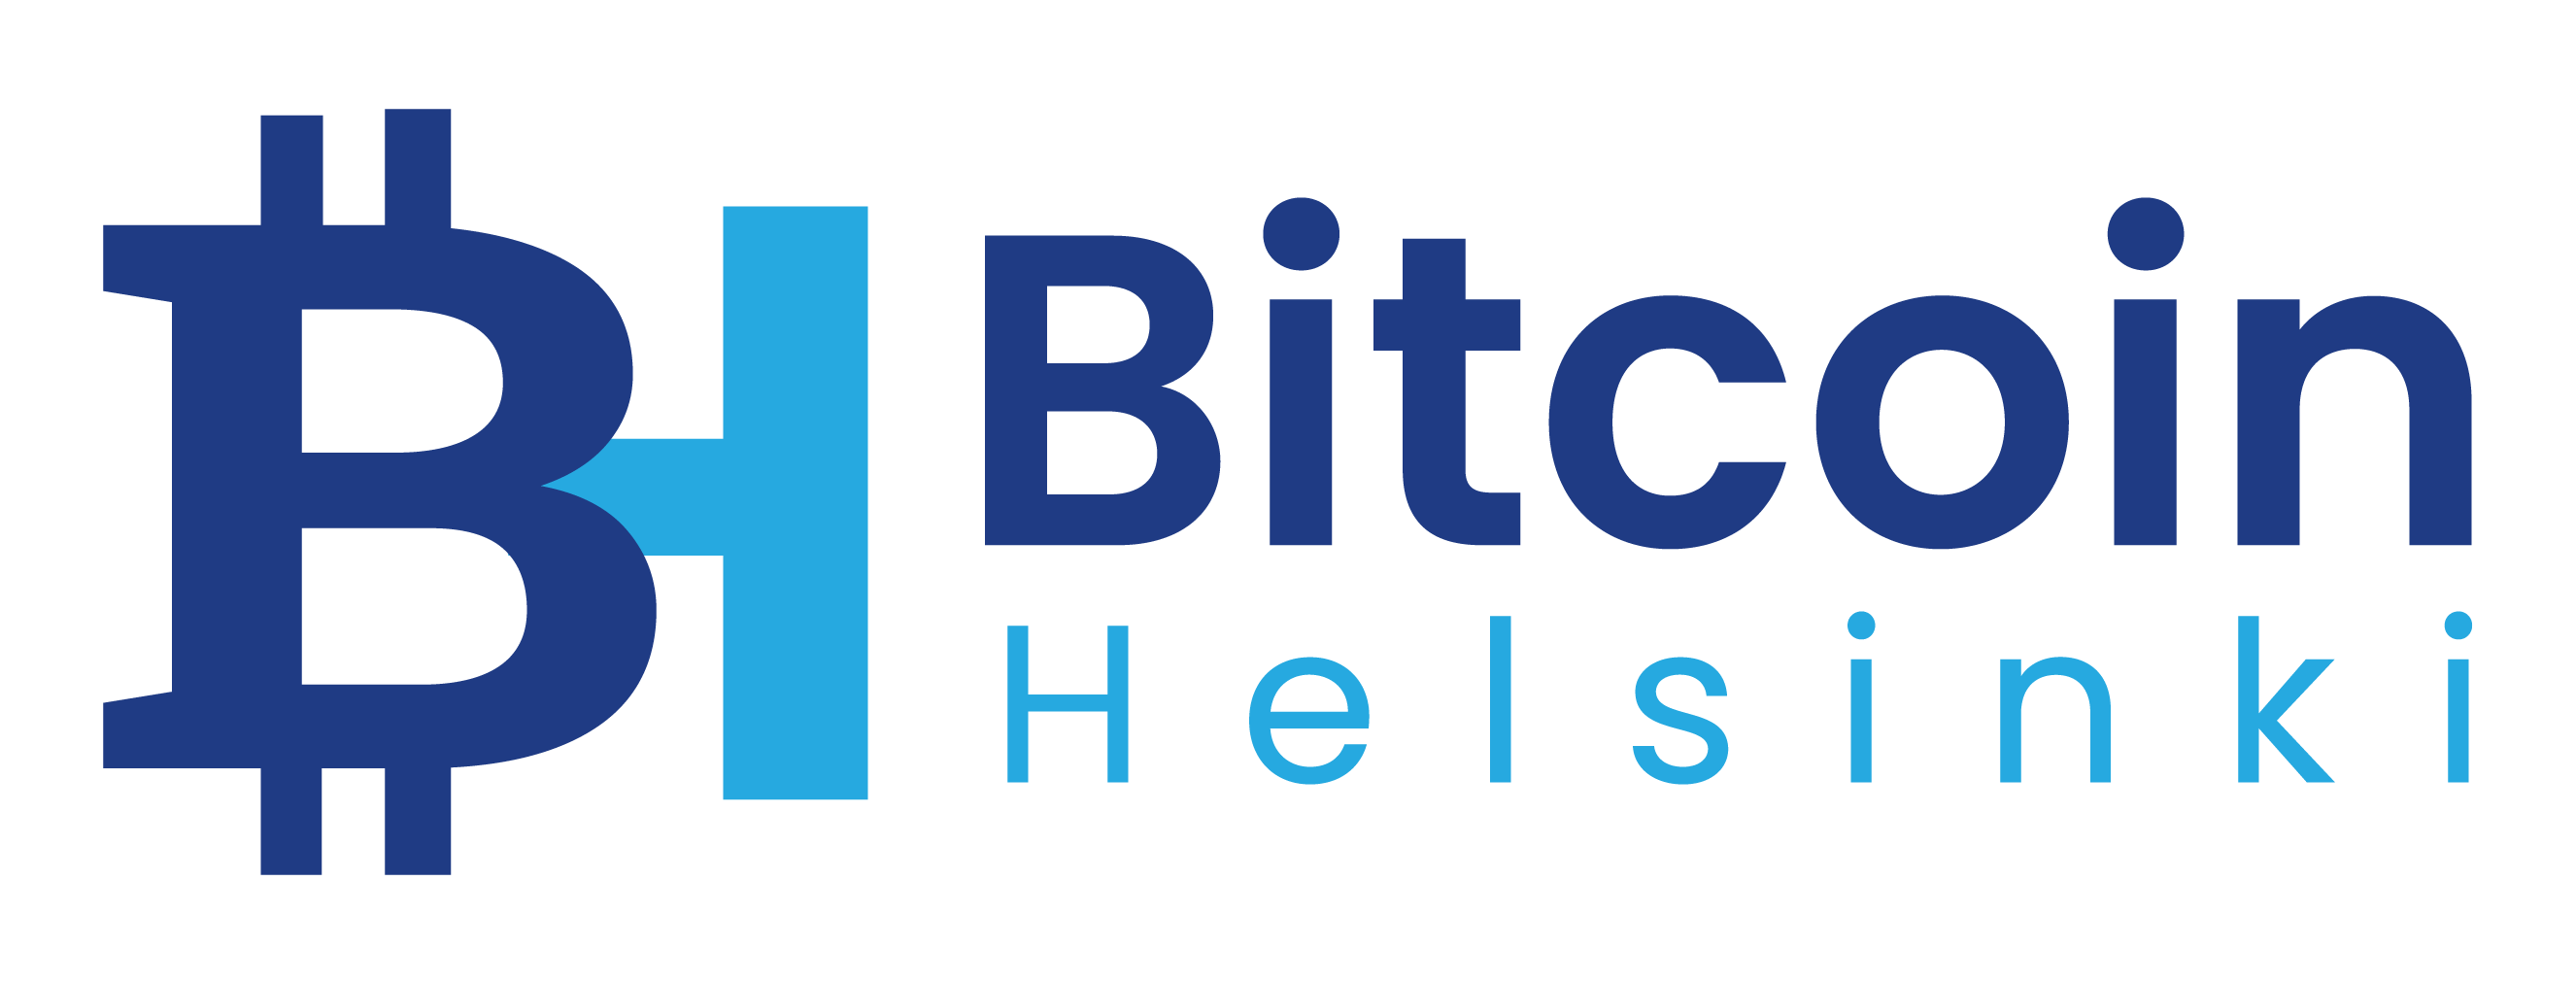 Bitcoin Helsinki - The Bitcoin Helsinki Team